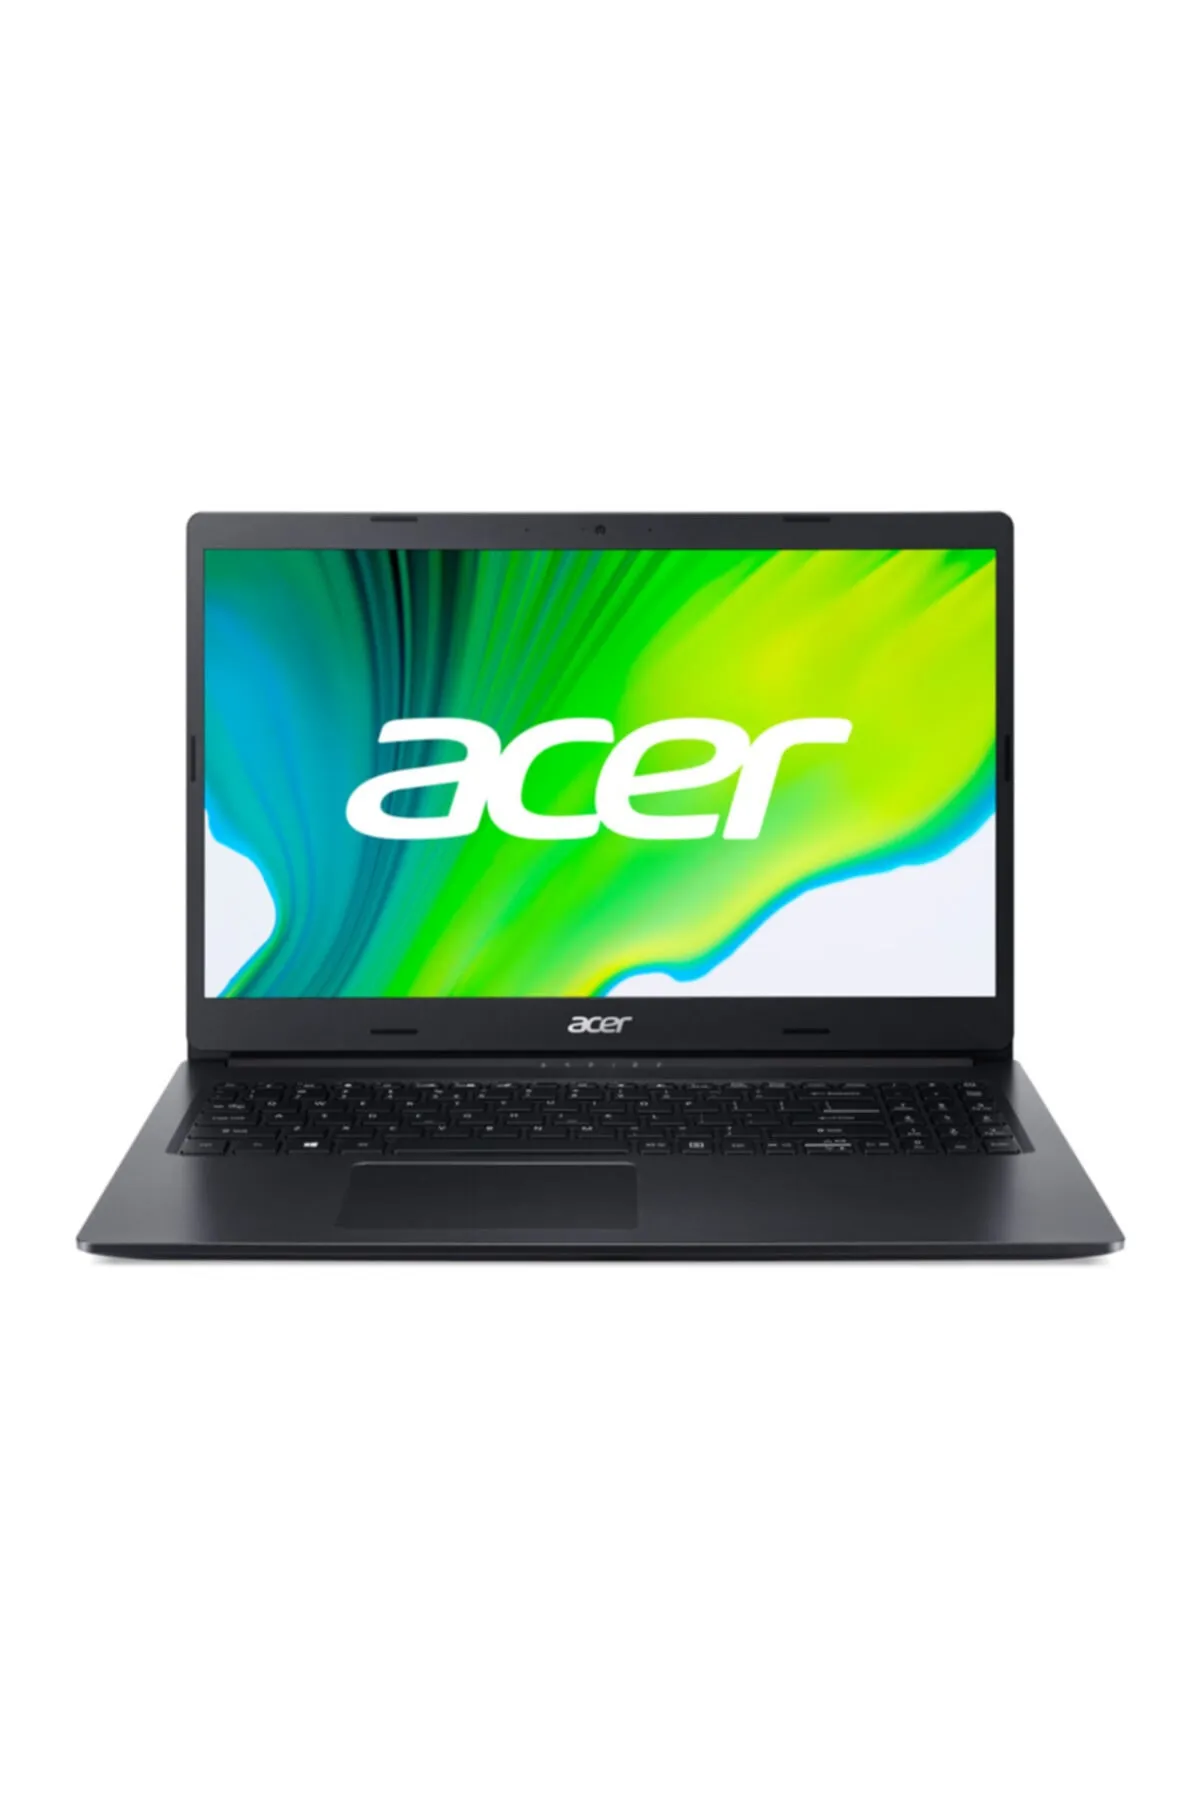 Acer Aspire 5 A514-52 Notebook